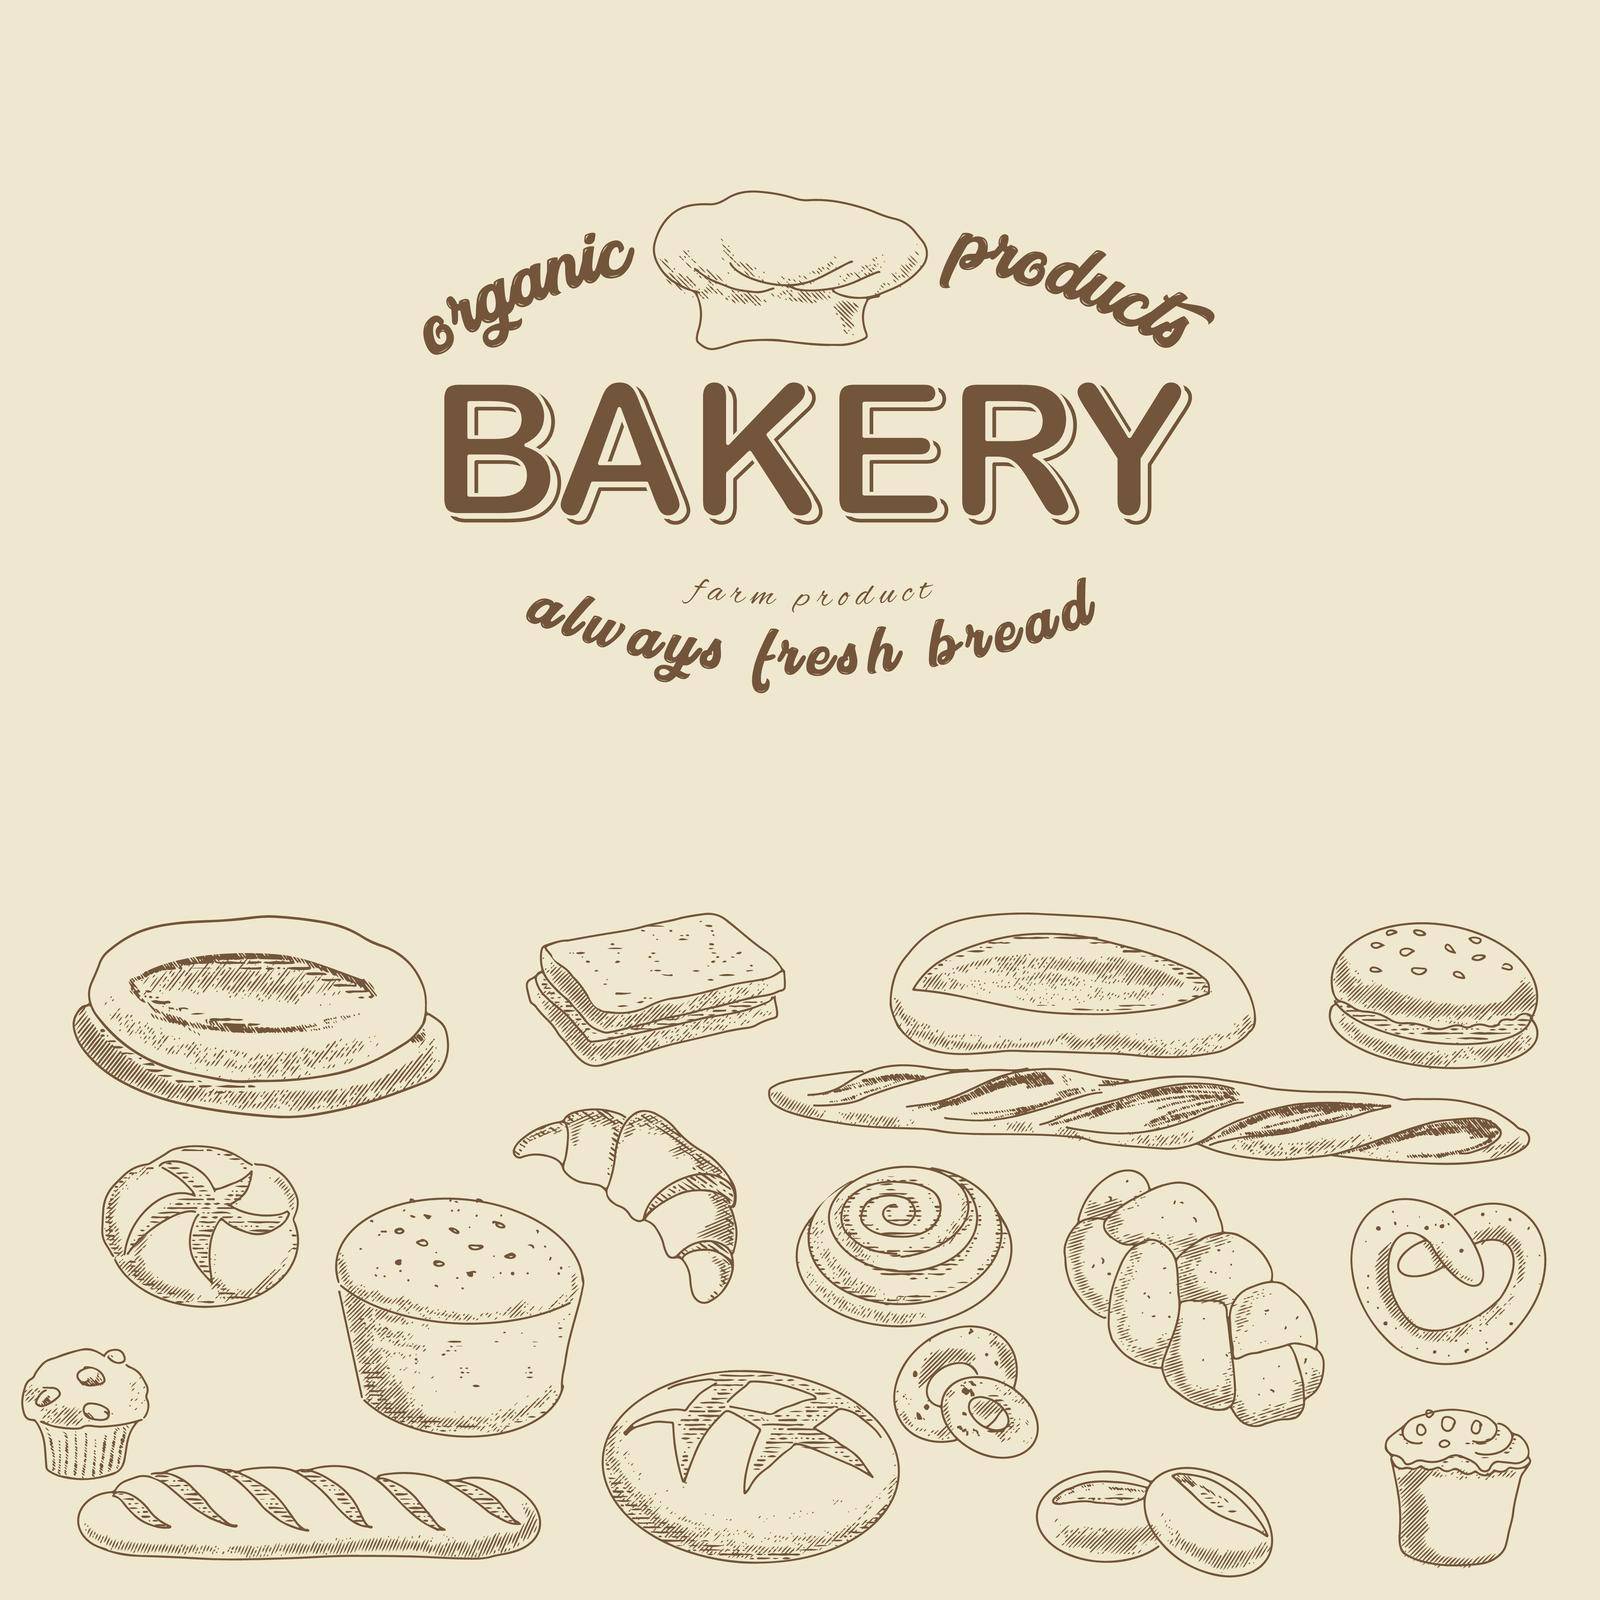 Bakery logo, bread product leaflet by GALA_art